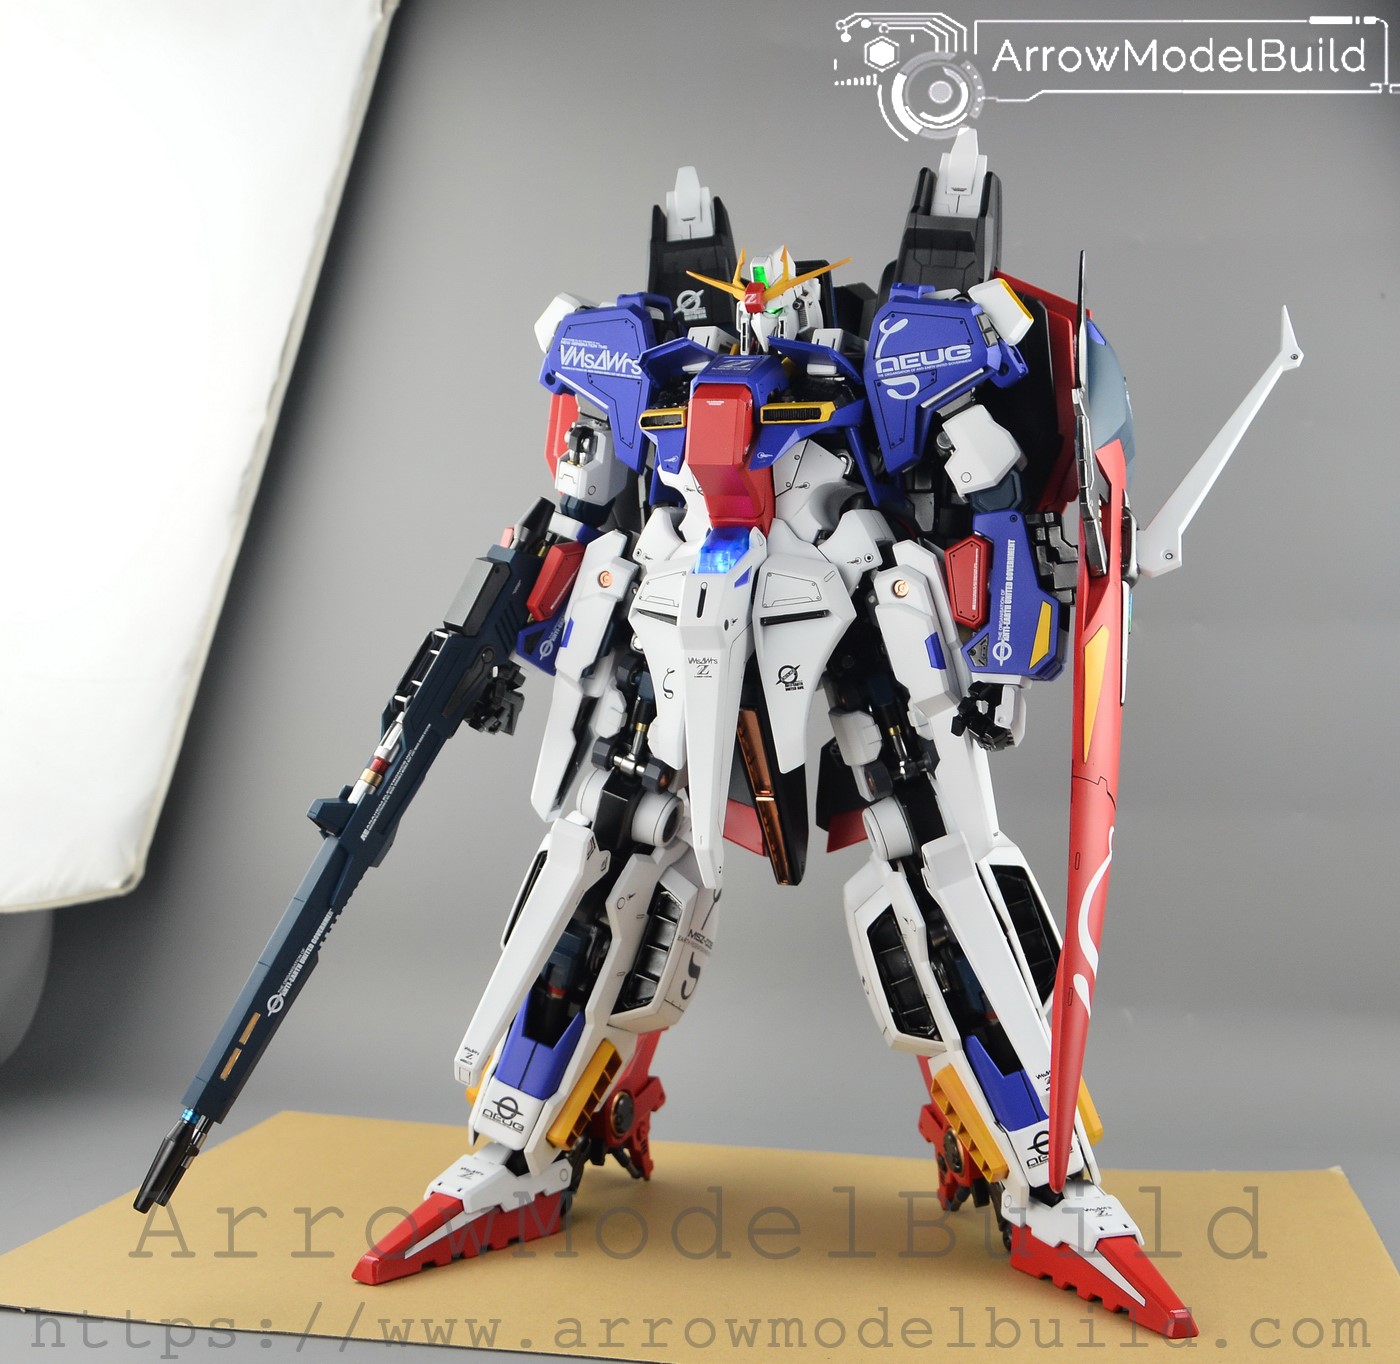 ArrowModelBuild - Figure and Robot, Gundam, Military, Vehicle, Arrow, Model  Build. ArrowModelBuild Z Gundam Built & Painted 1/48 Model Kit